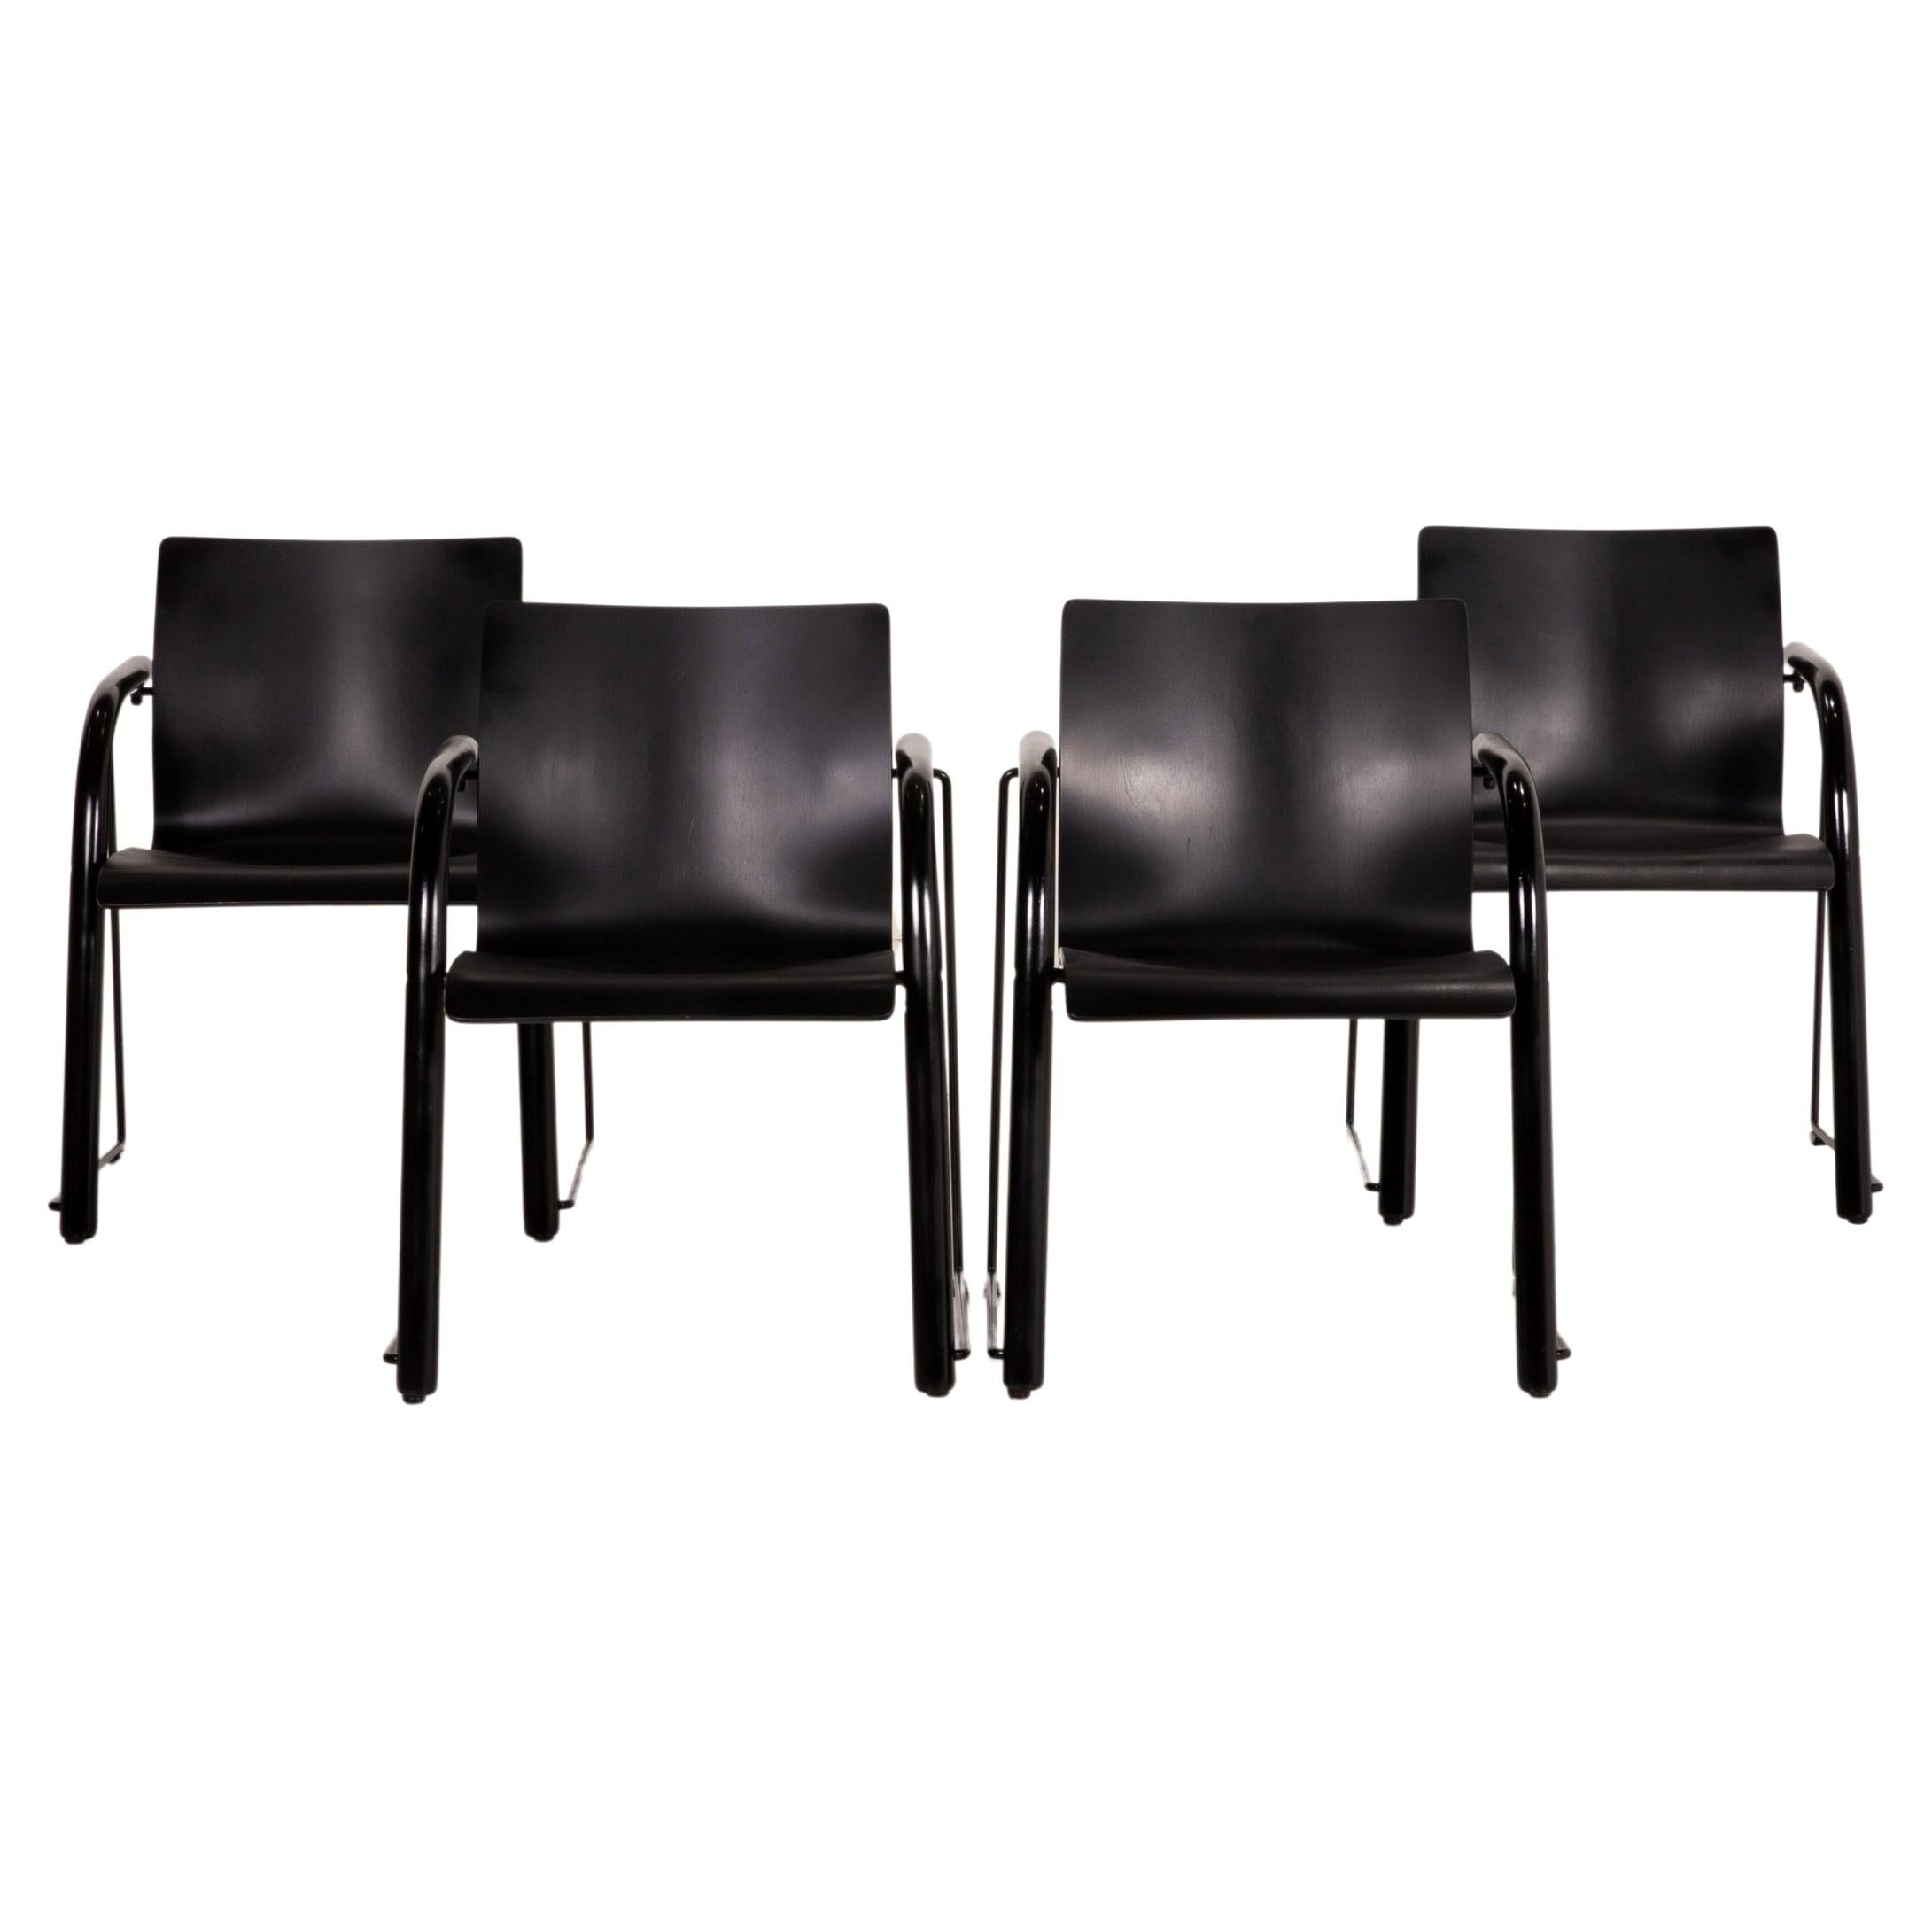 Thonet S320 Wooden Chair Set Black 4x Chair